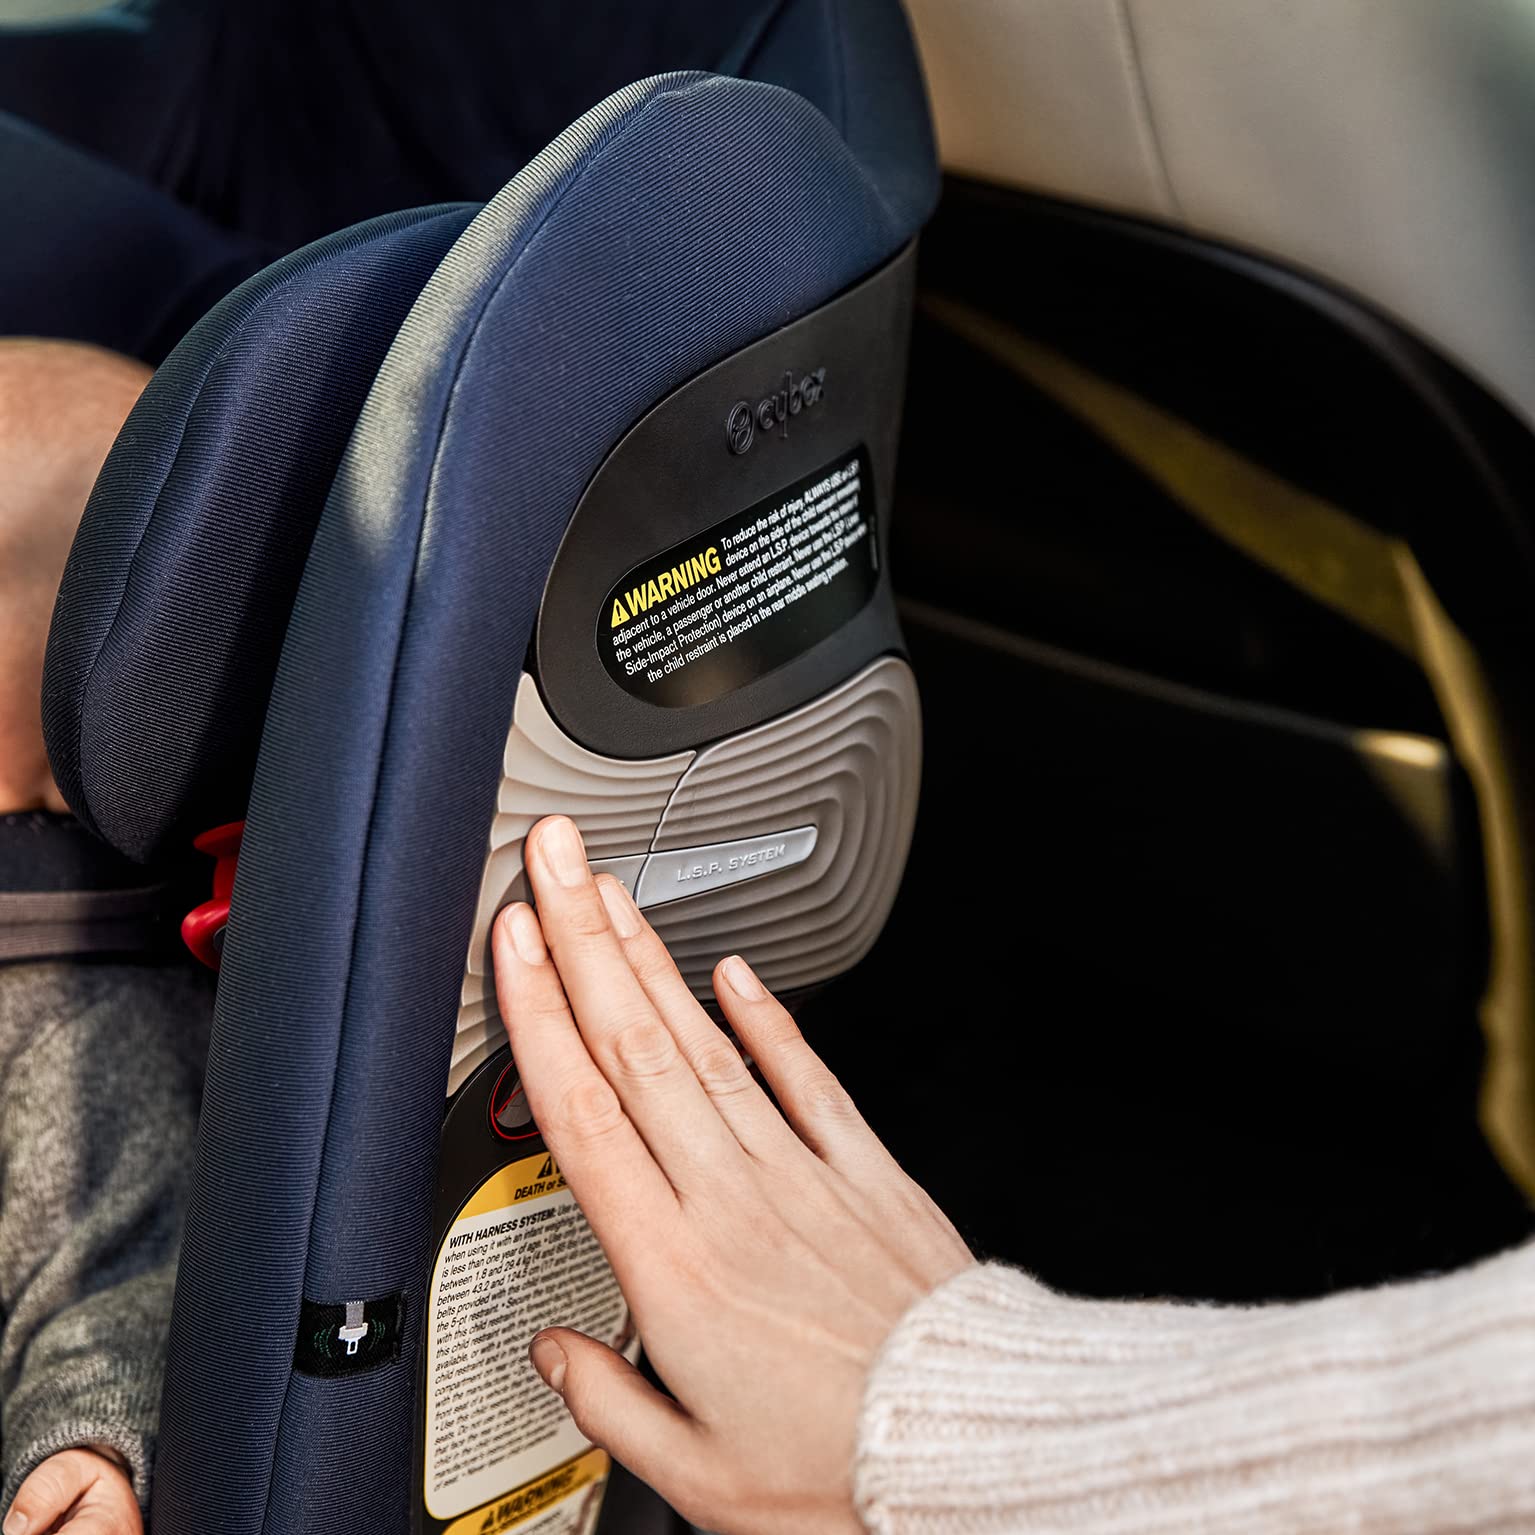 Cybex Standard Eternis S All-in-One Car Seat with SensorSafe, Denim Blue